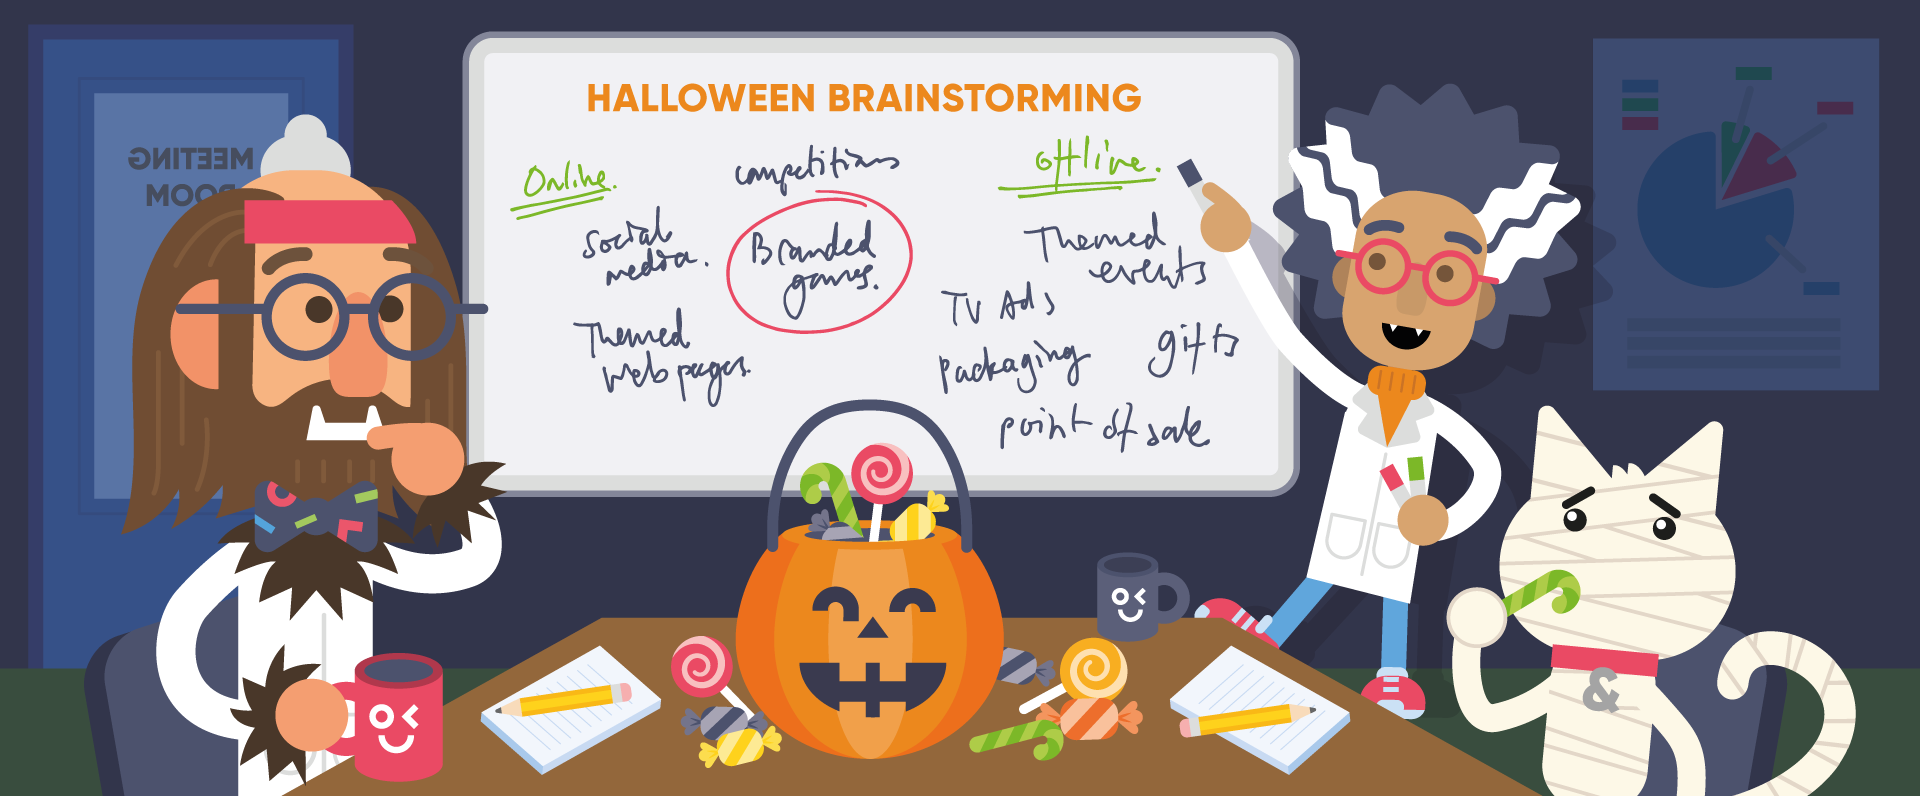 Marketing Ideas for Halloween Blog Header